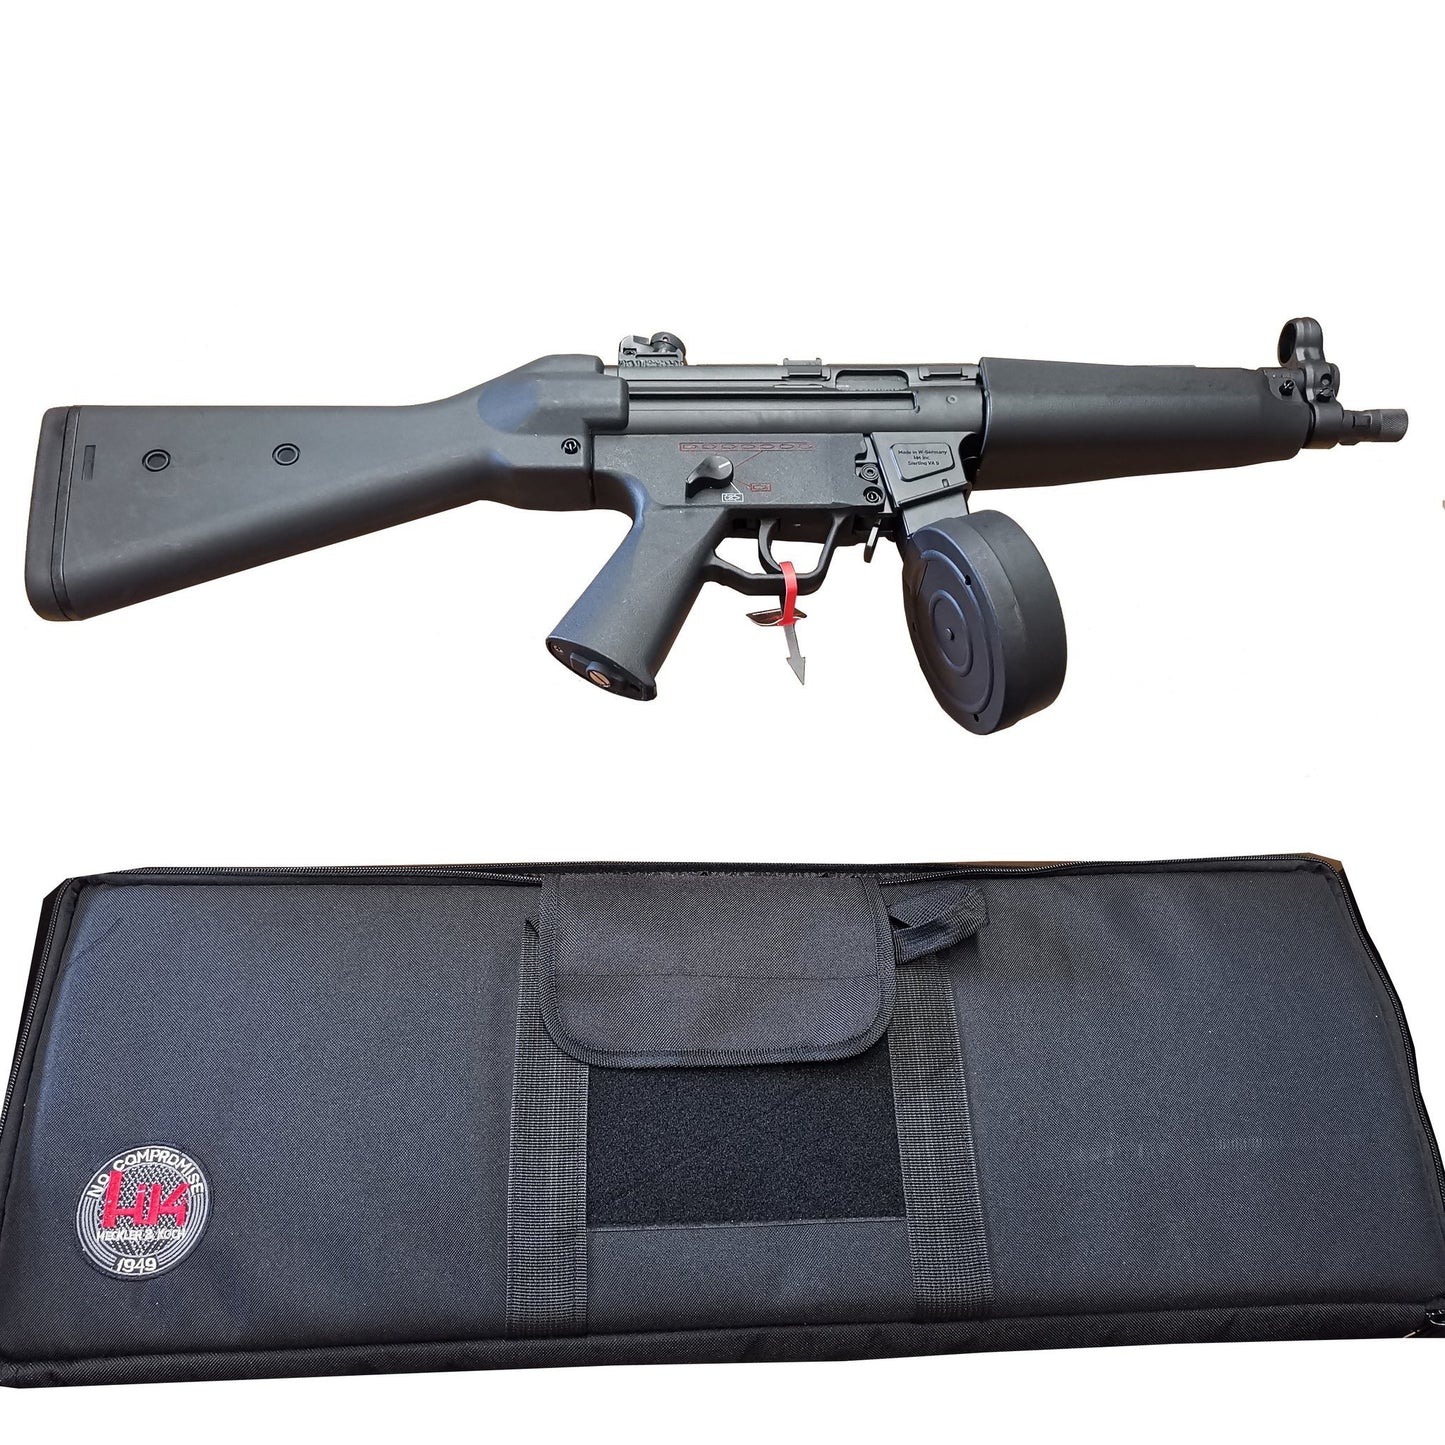 LDT MP5 - Gel Blaster Guns, Pistols, Handguns, Rifles For Sale - Sting Ops Tactical